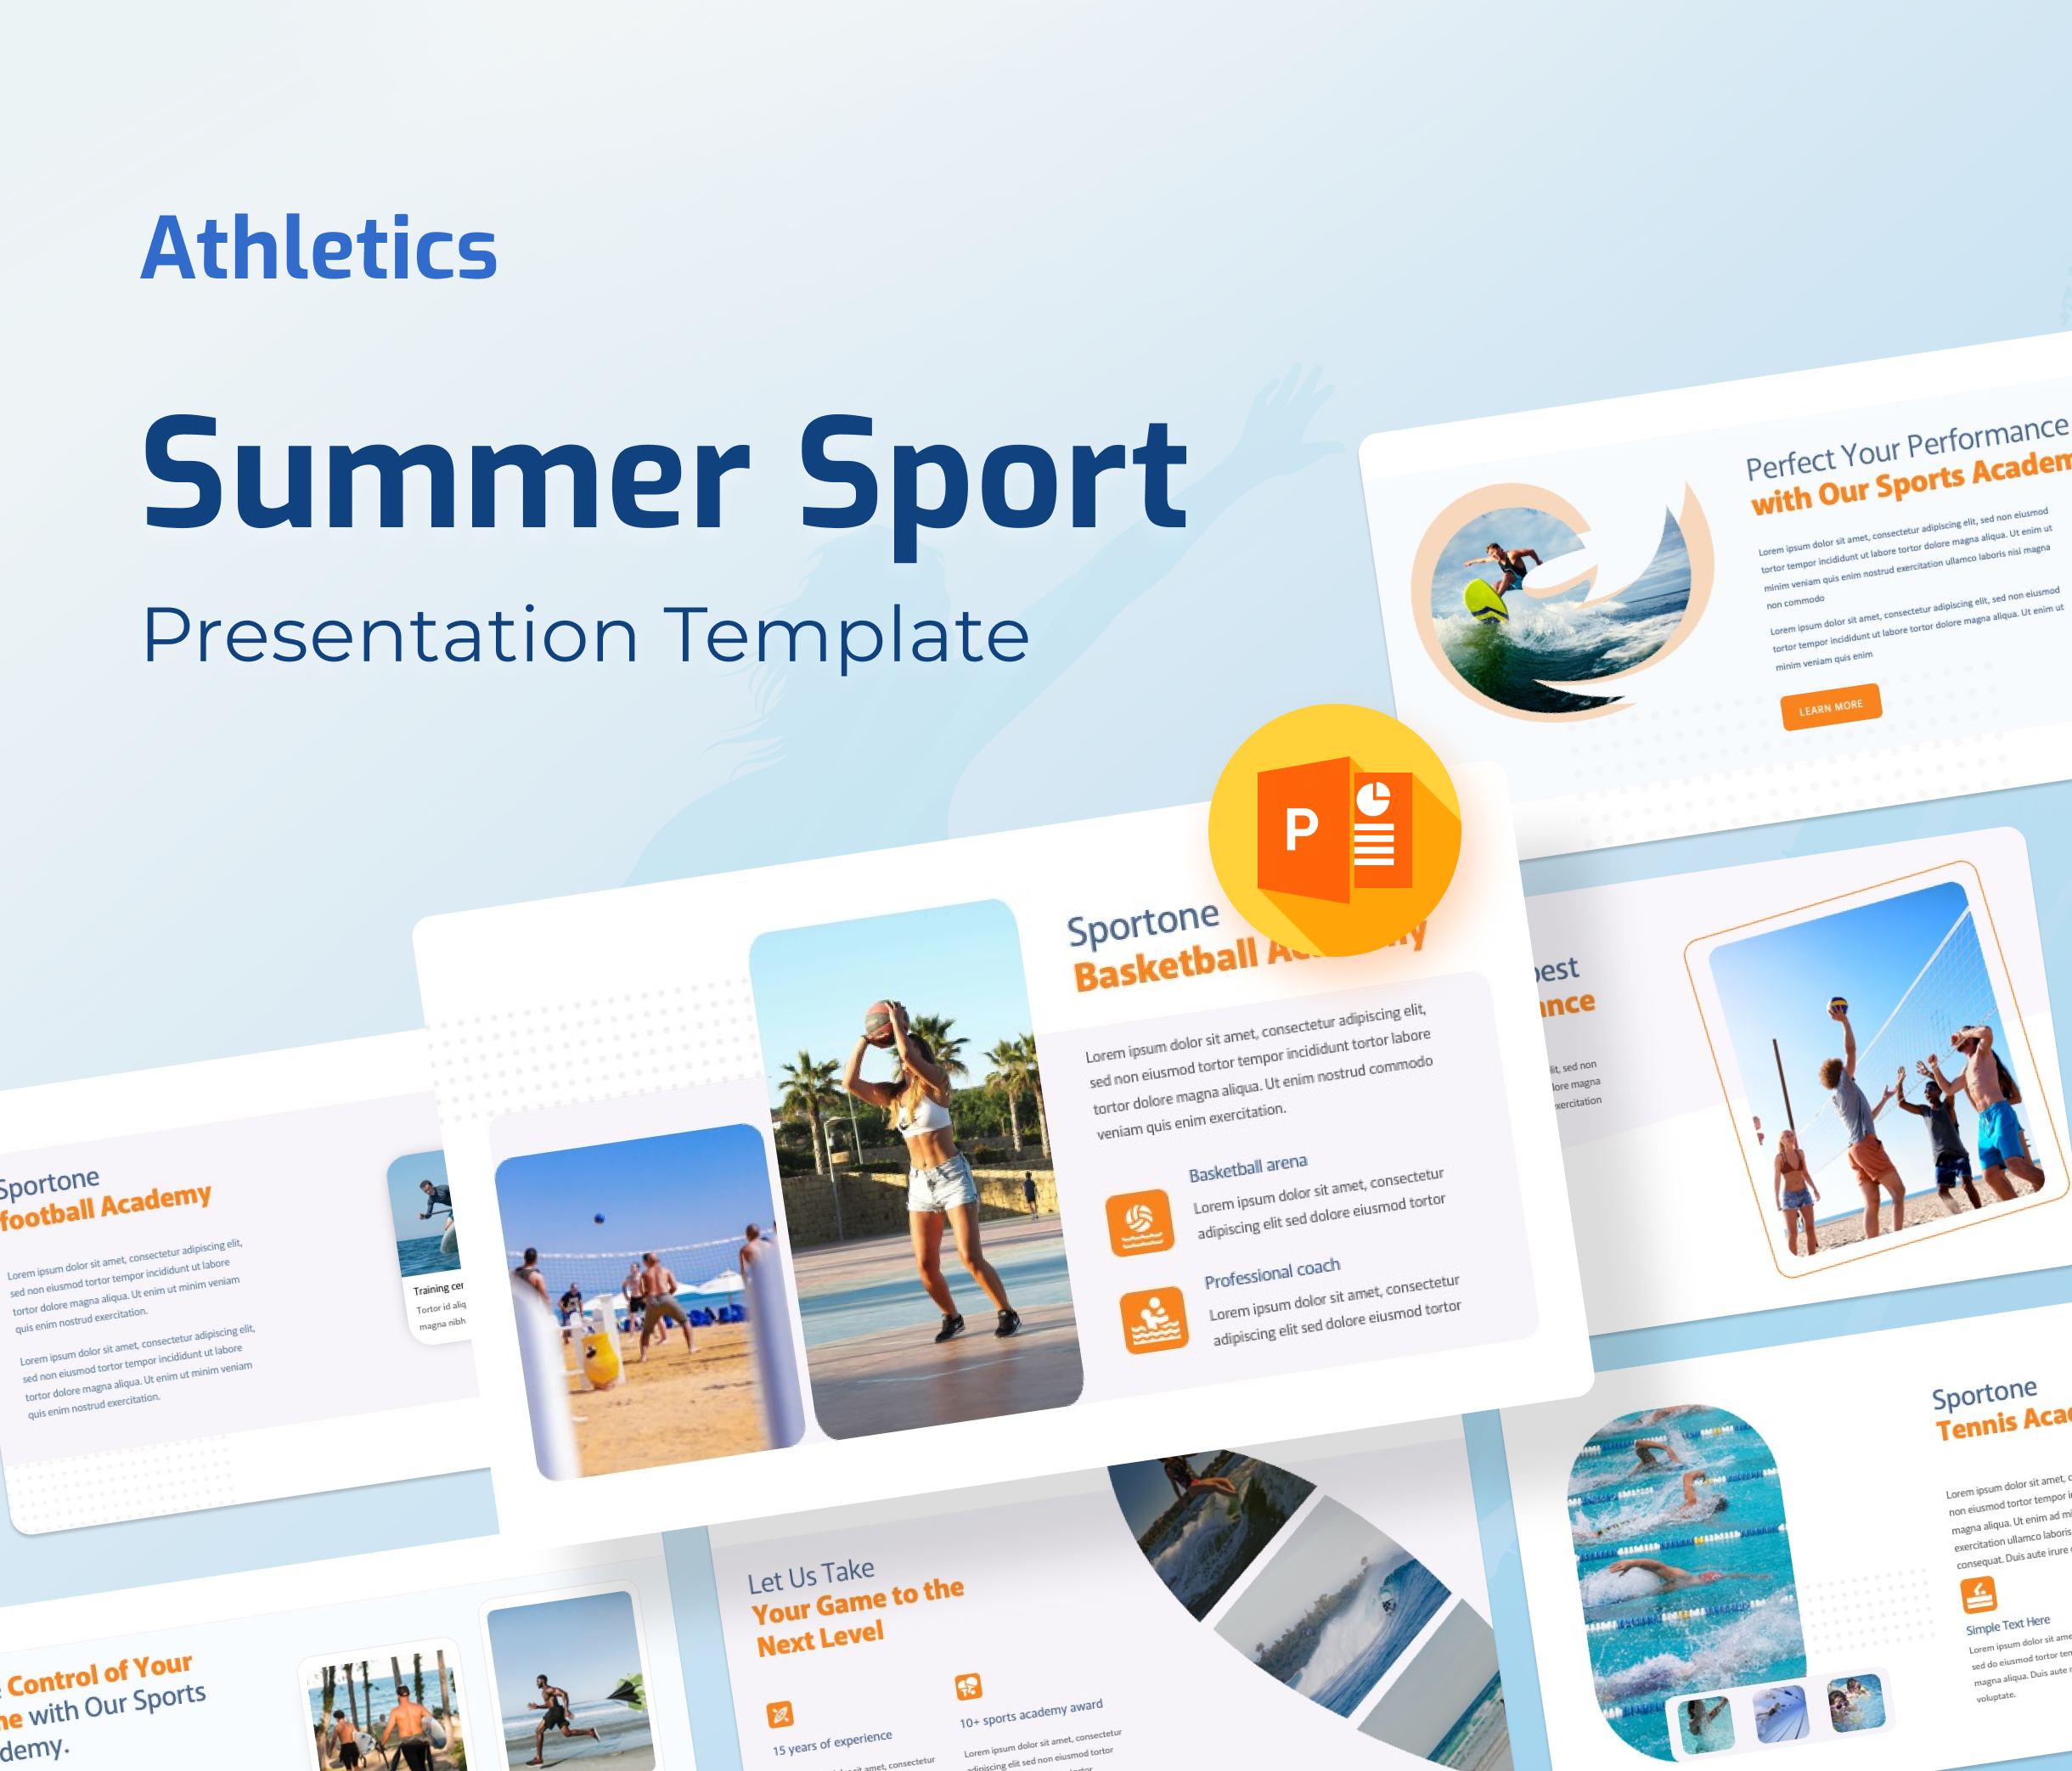 Athletics – Summer SportS PowerPoint Presentation Template